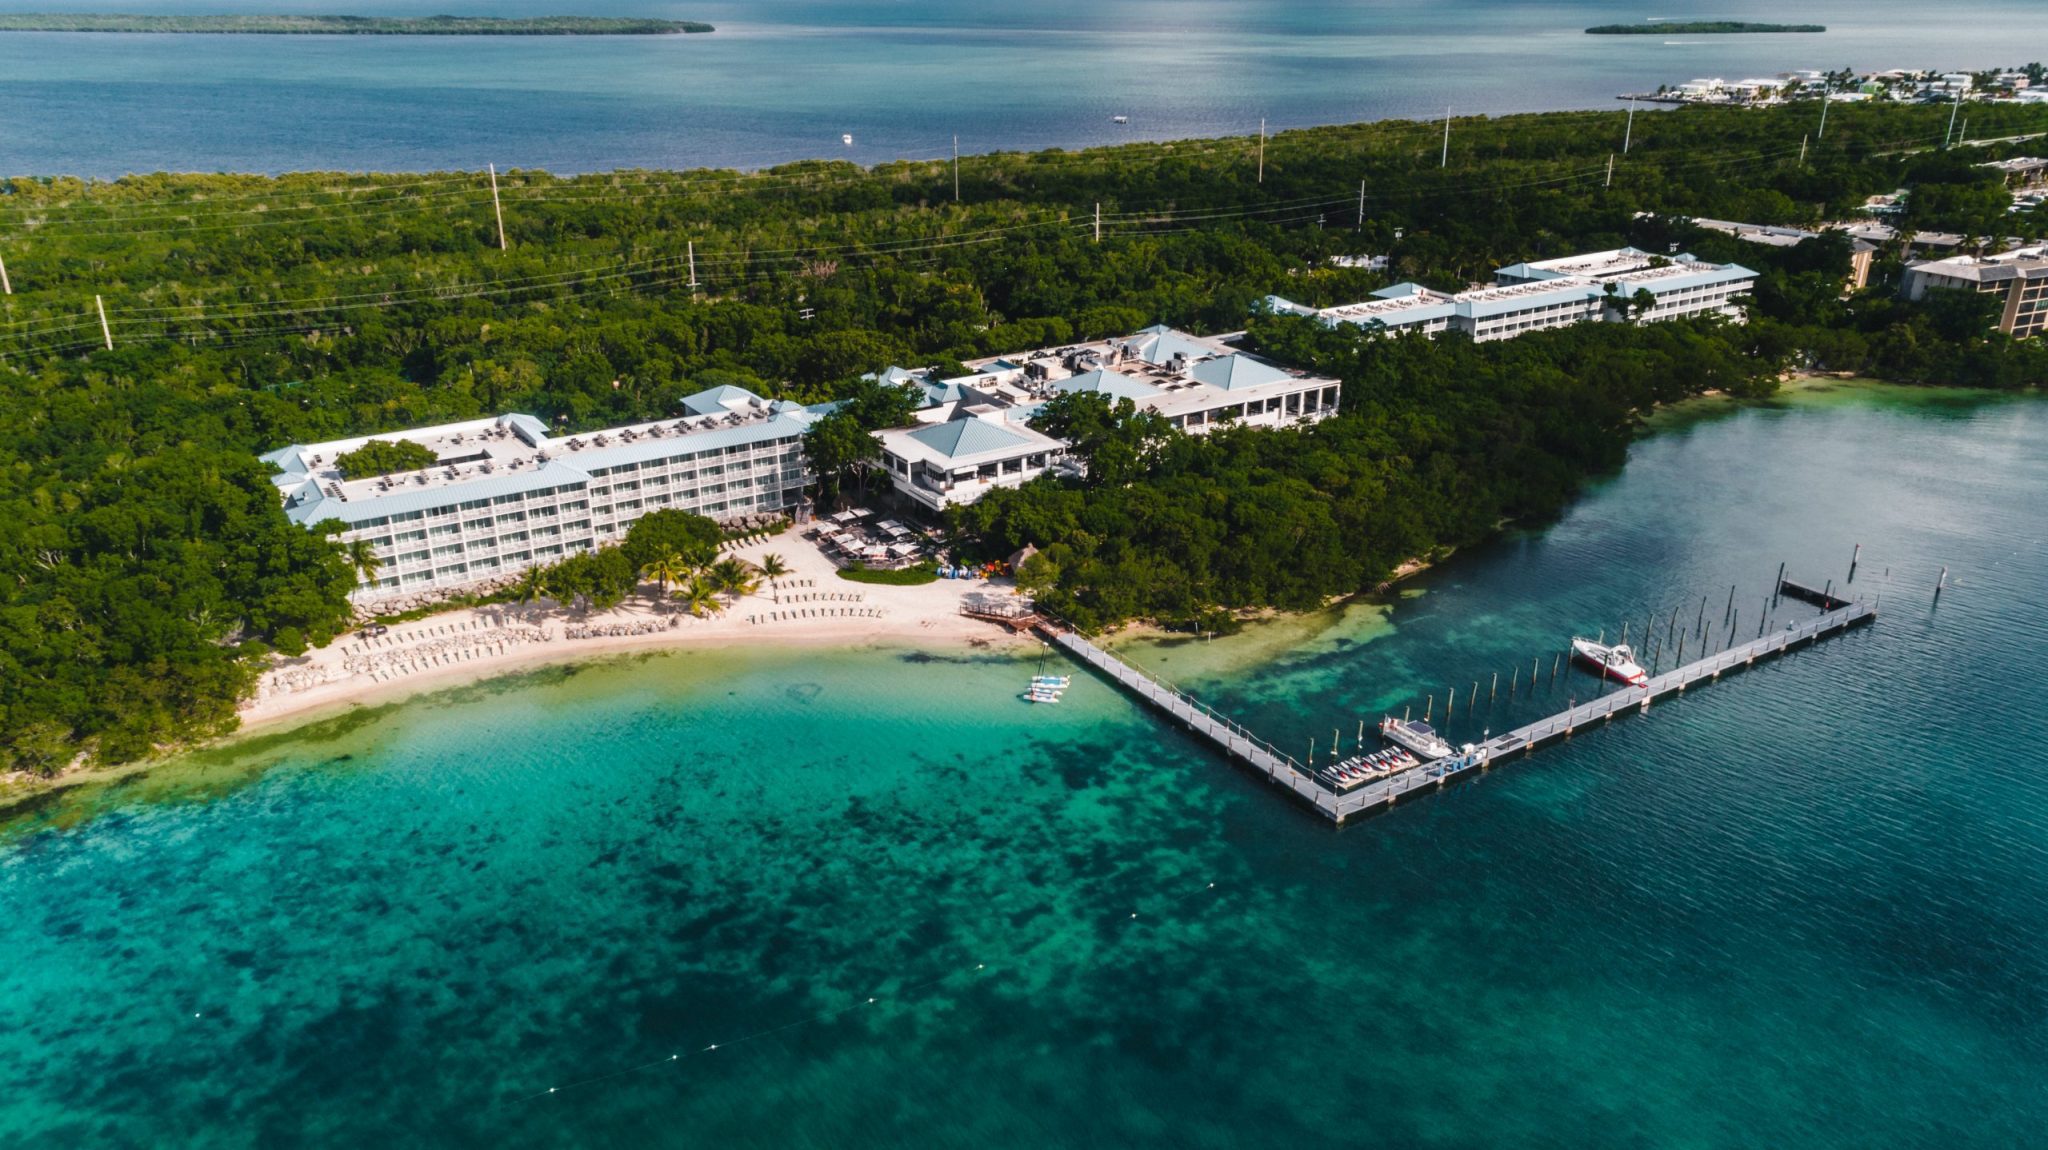 Stunning aerial view of Baker's Cay Resort, showcasing its lush greenery and beachfront